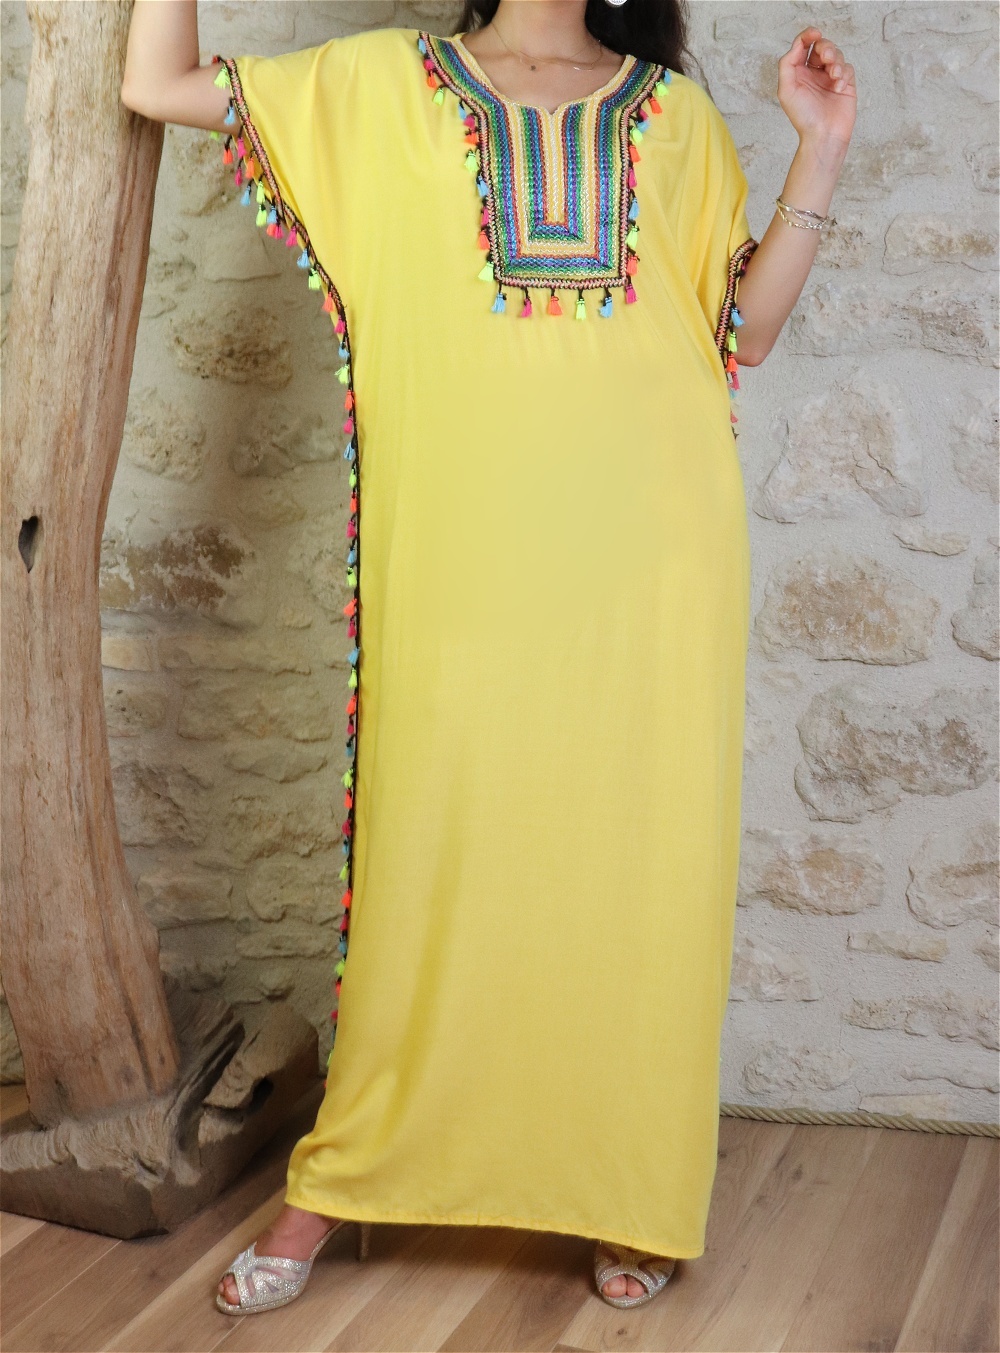 Gandoura robe traditionnelle marocaine orientale avec broderie hijab Taille  S Couleur Jaune Pimenté Taille S Couleur Jaune Pimenté